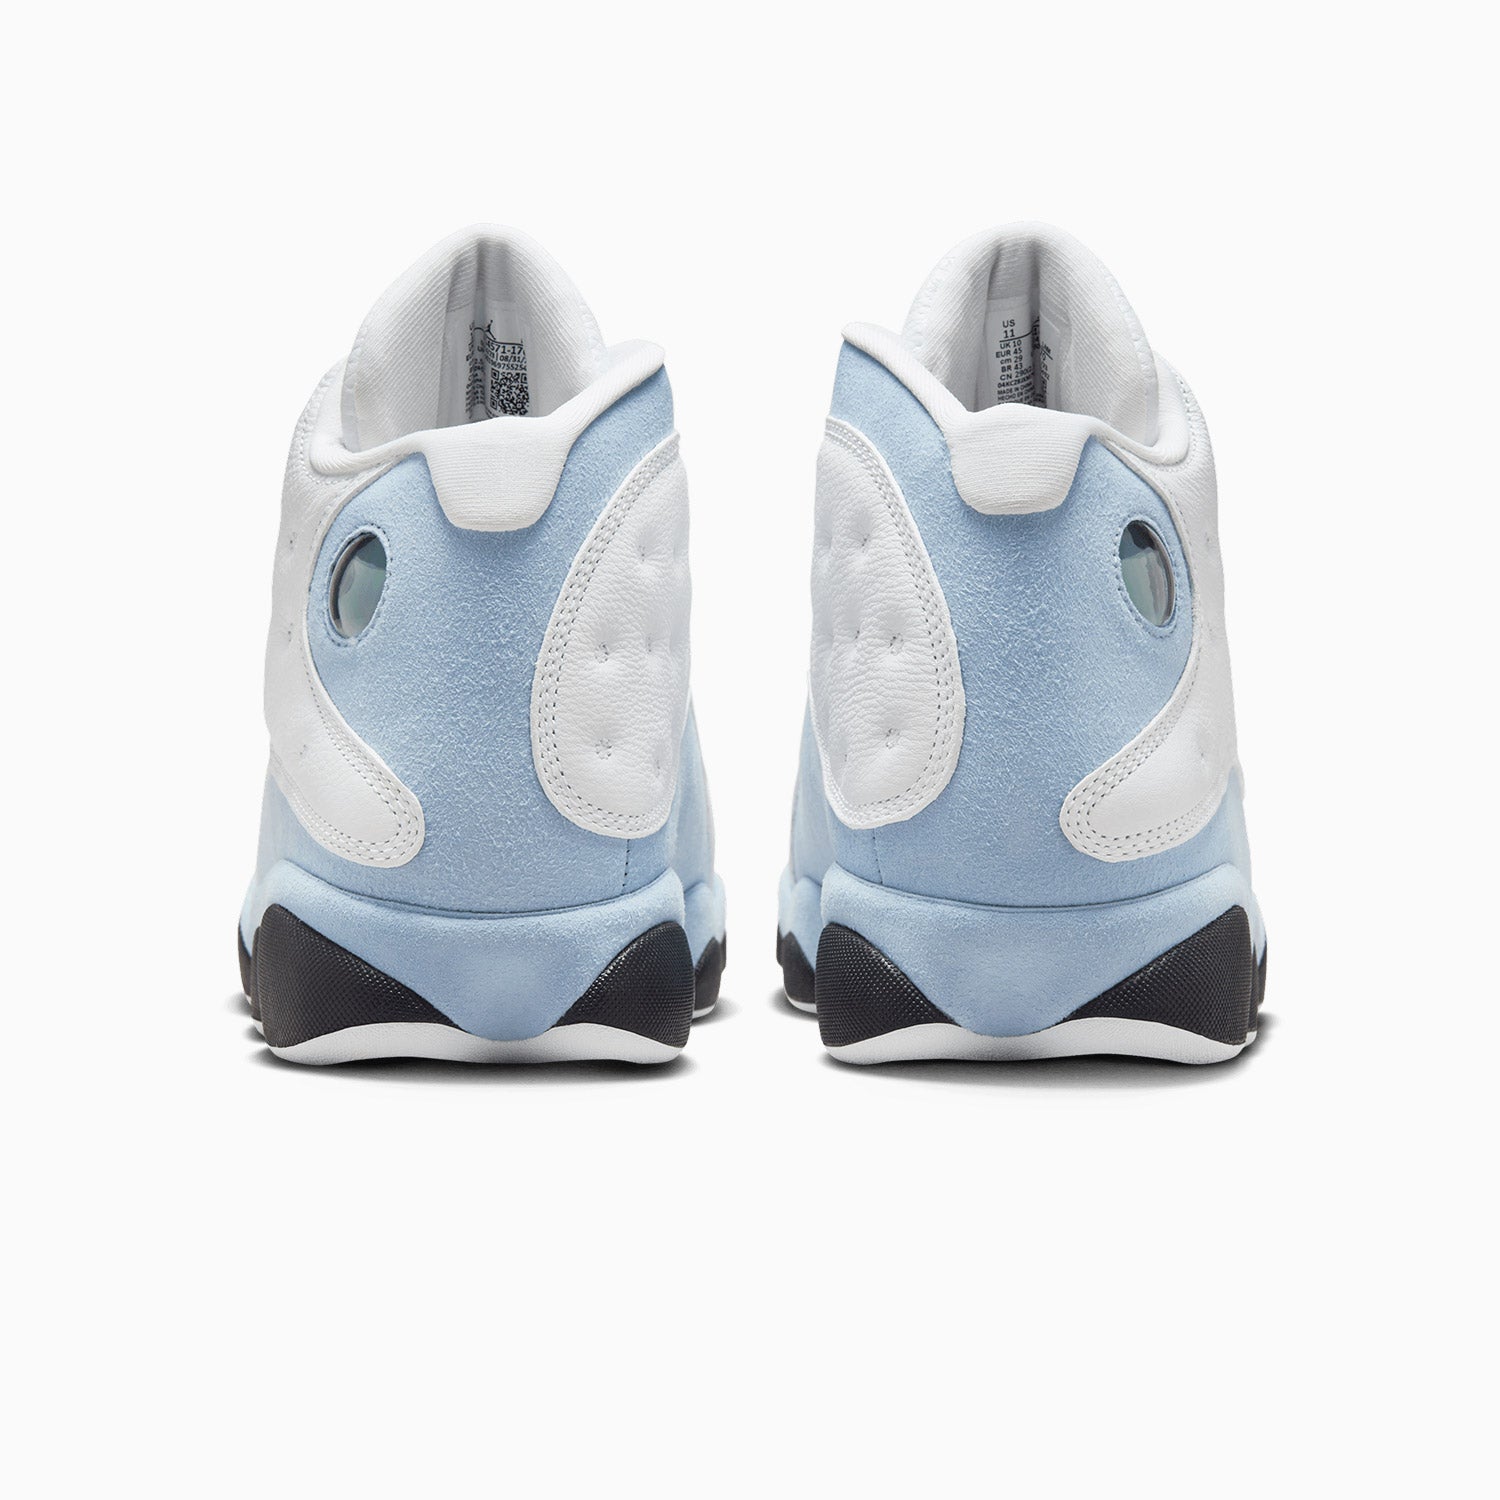 mens-air-jordan-13-retro-blue-grey-shoes-414571-170